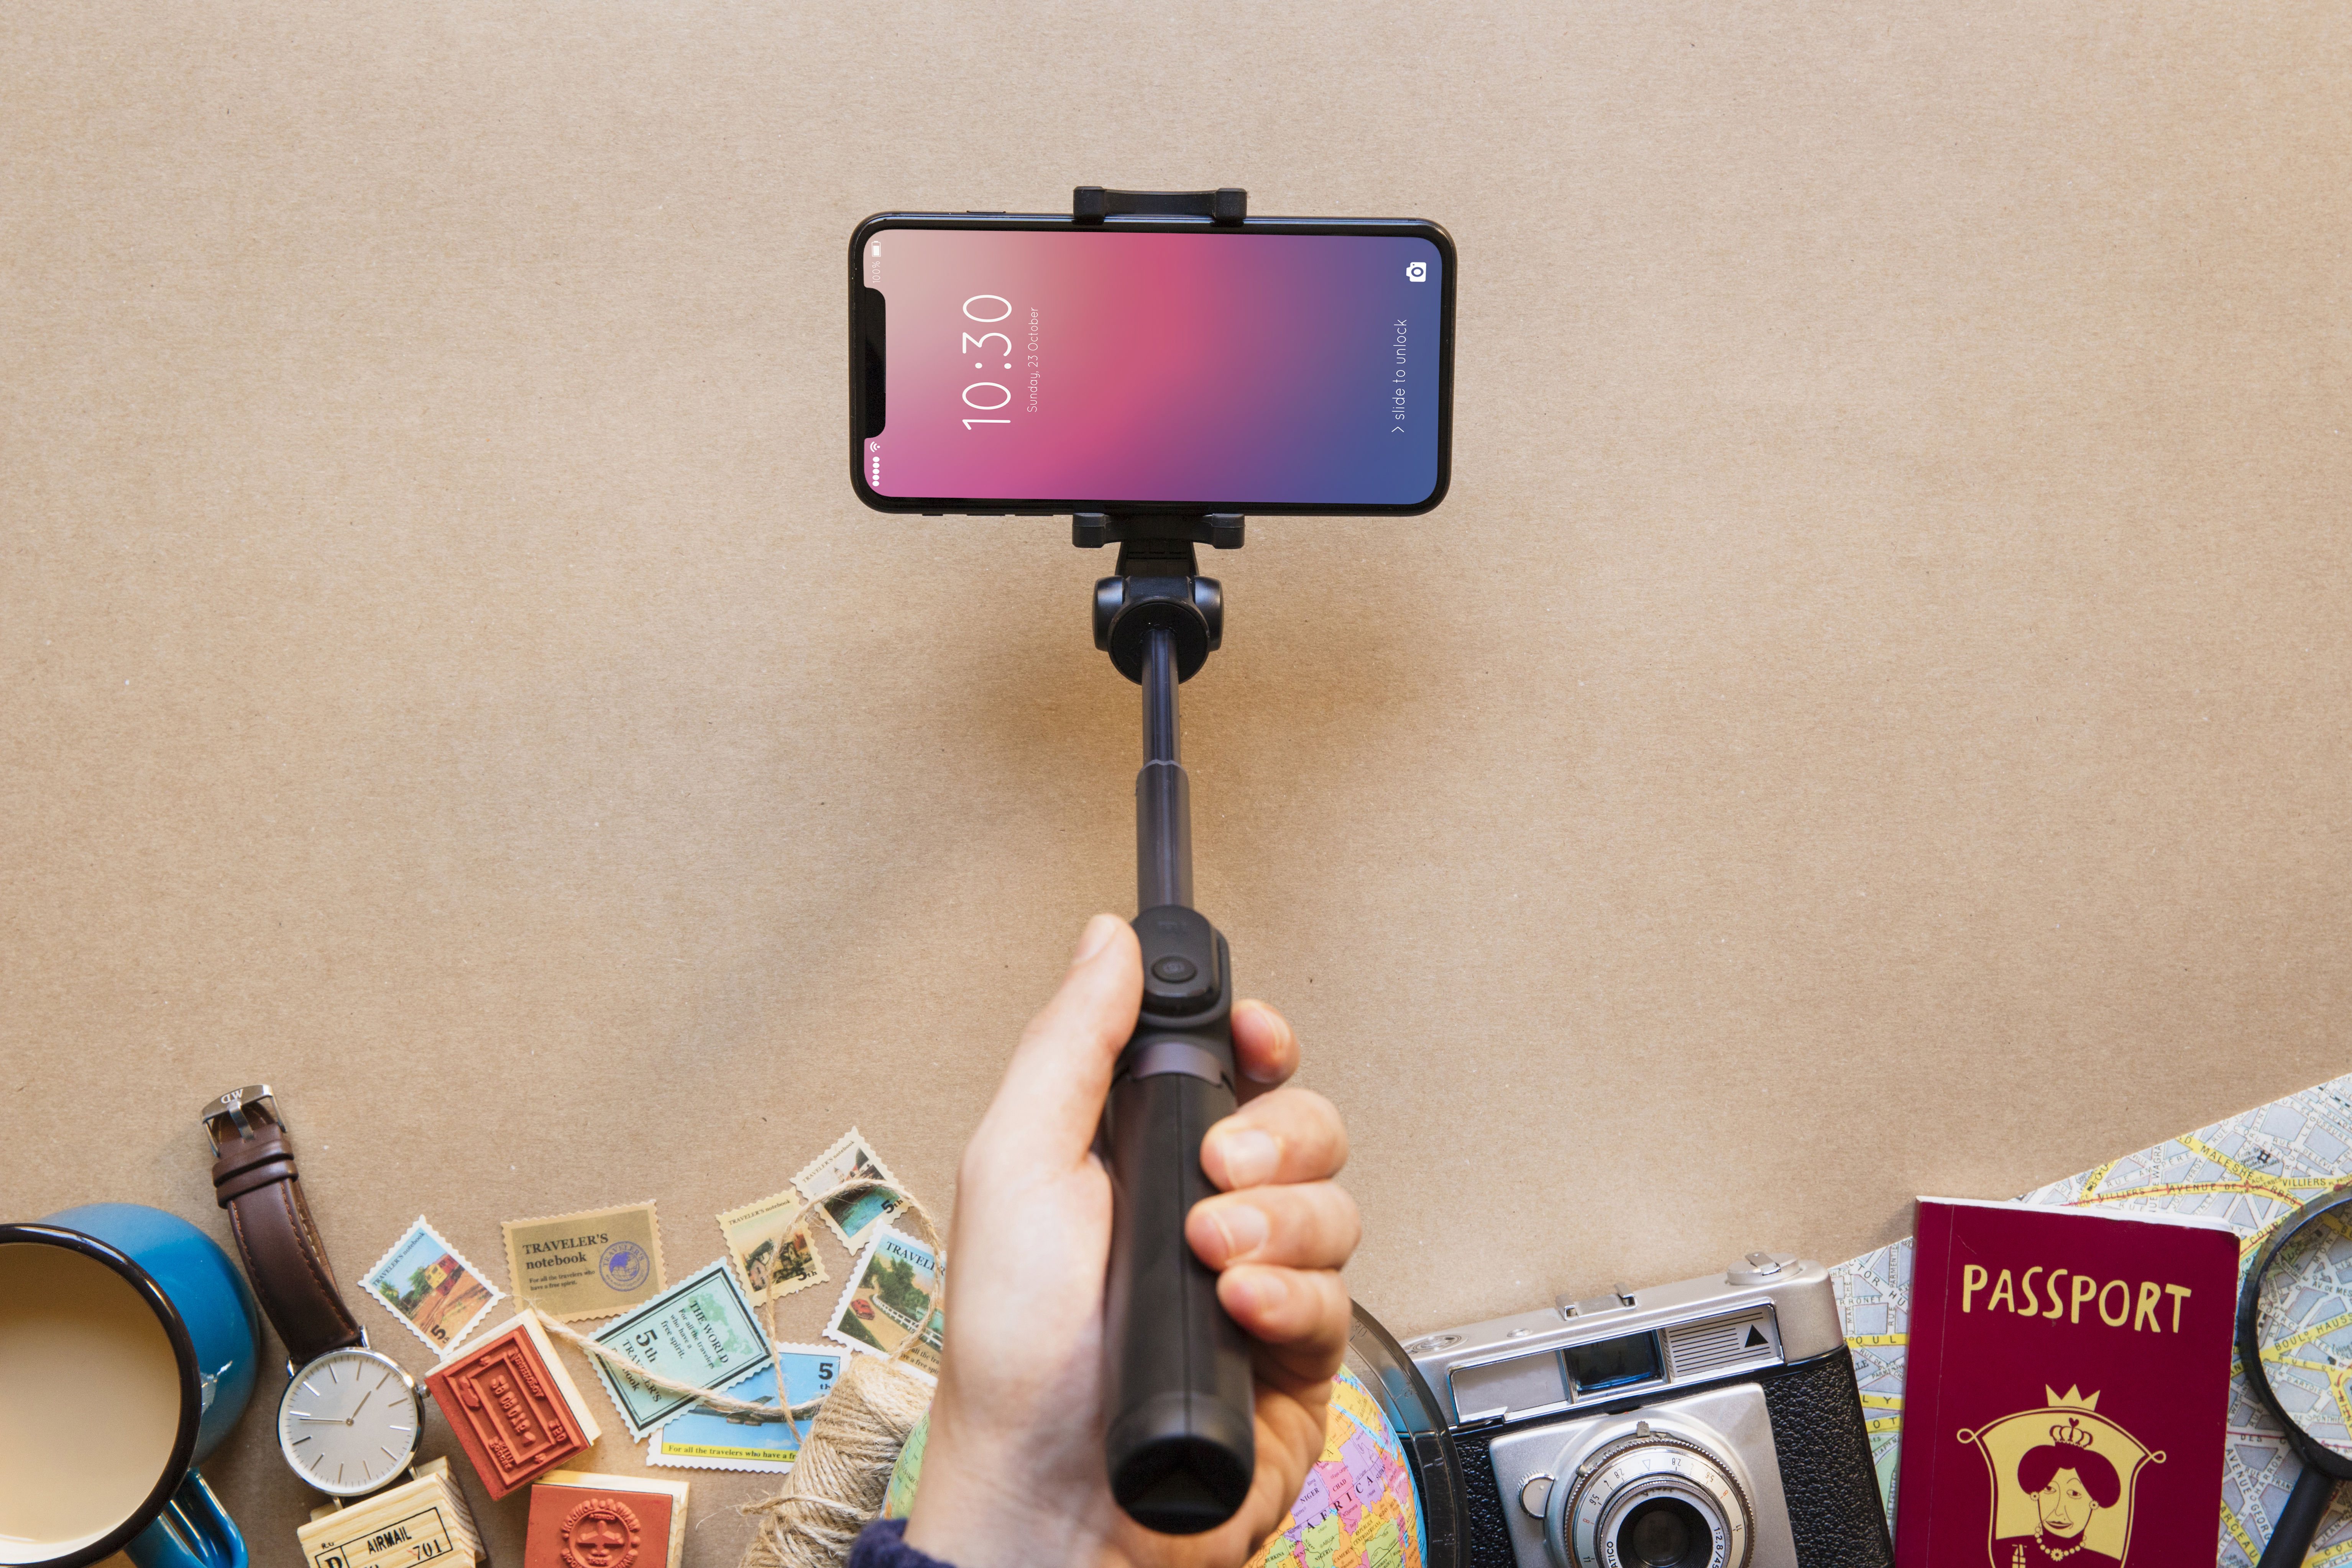 Selfie stick with phone mounted on: Photo: Freepik